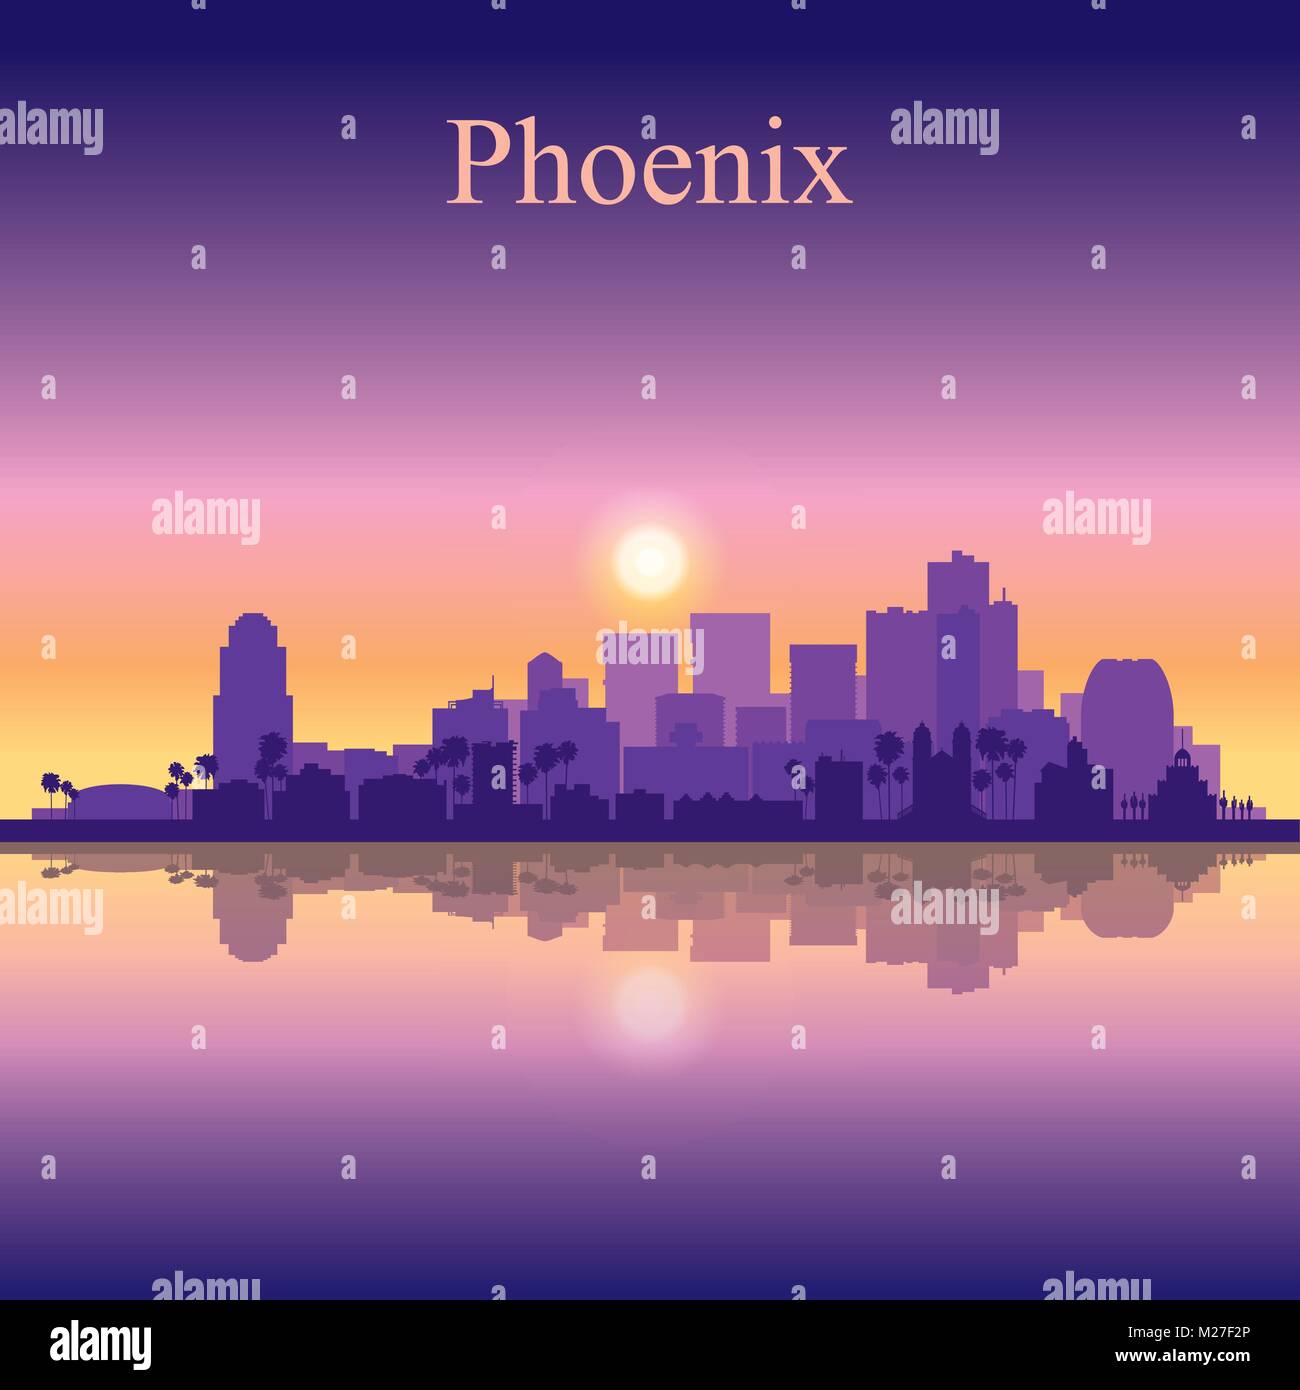 Phoenix city skyline silhouette background, vector illustration Stock Vector